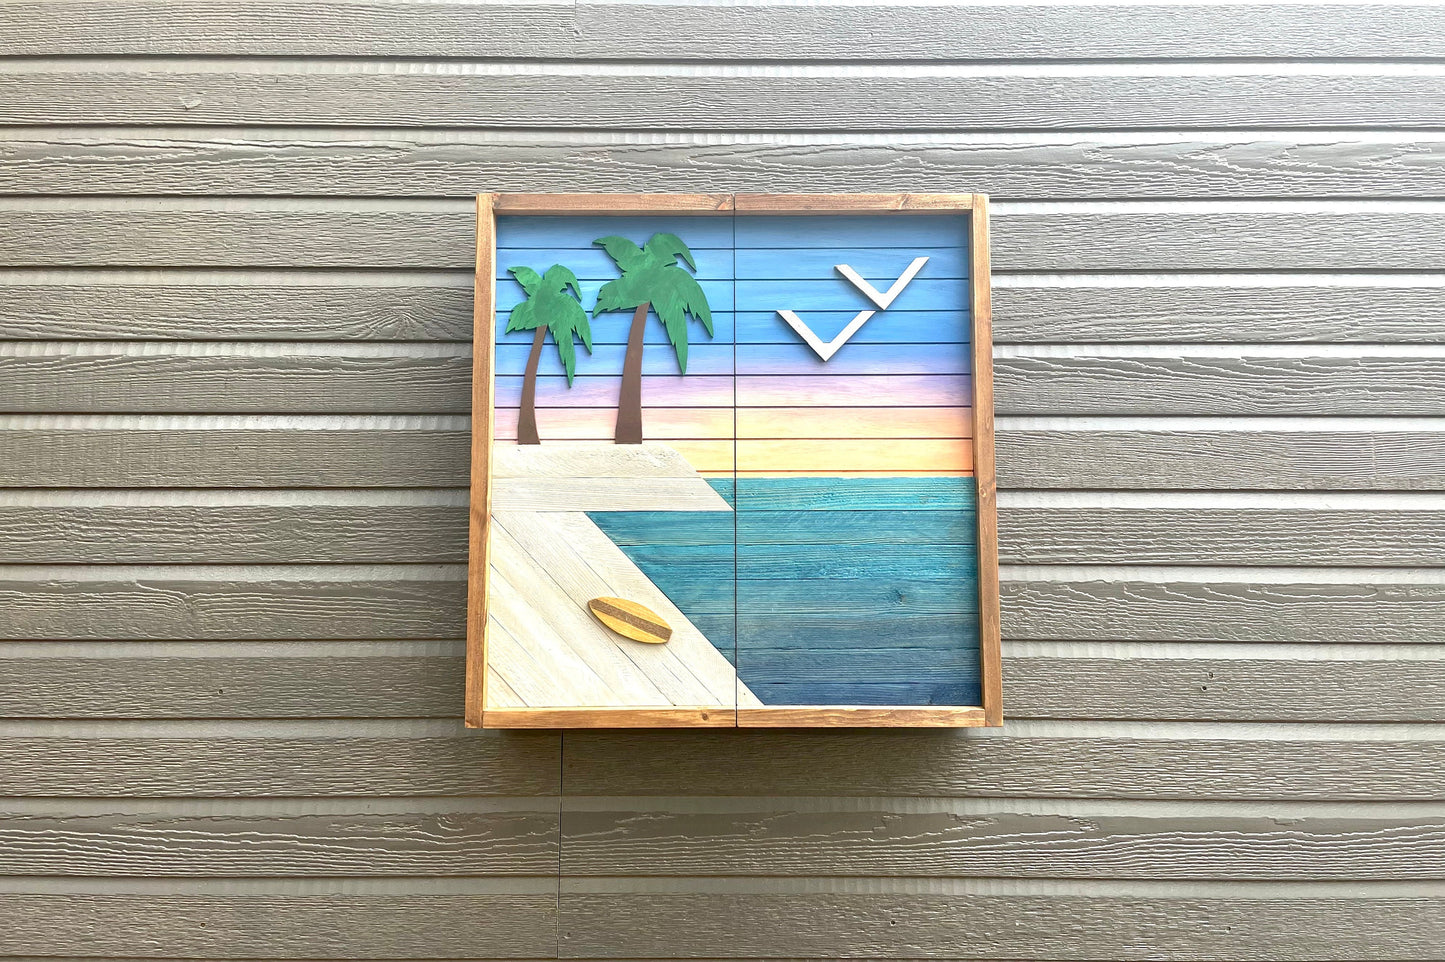 Rustic Dartboard Cabinet 24”x24” - Rustic Beach Front-Rustic Cabinet - Gameroom Art - Wall Decor - Rustic Artwork- Beach Art